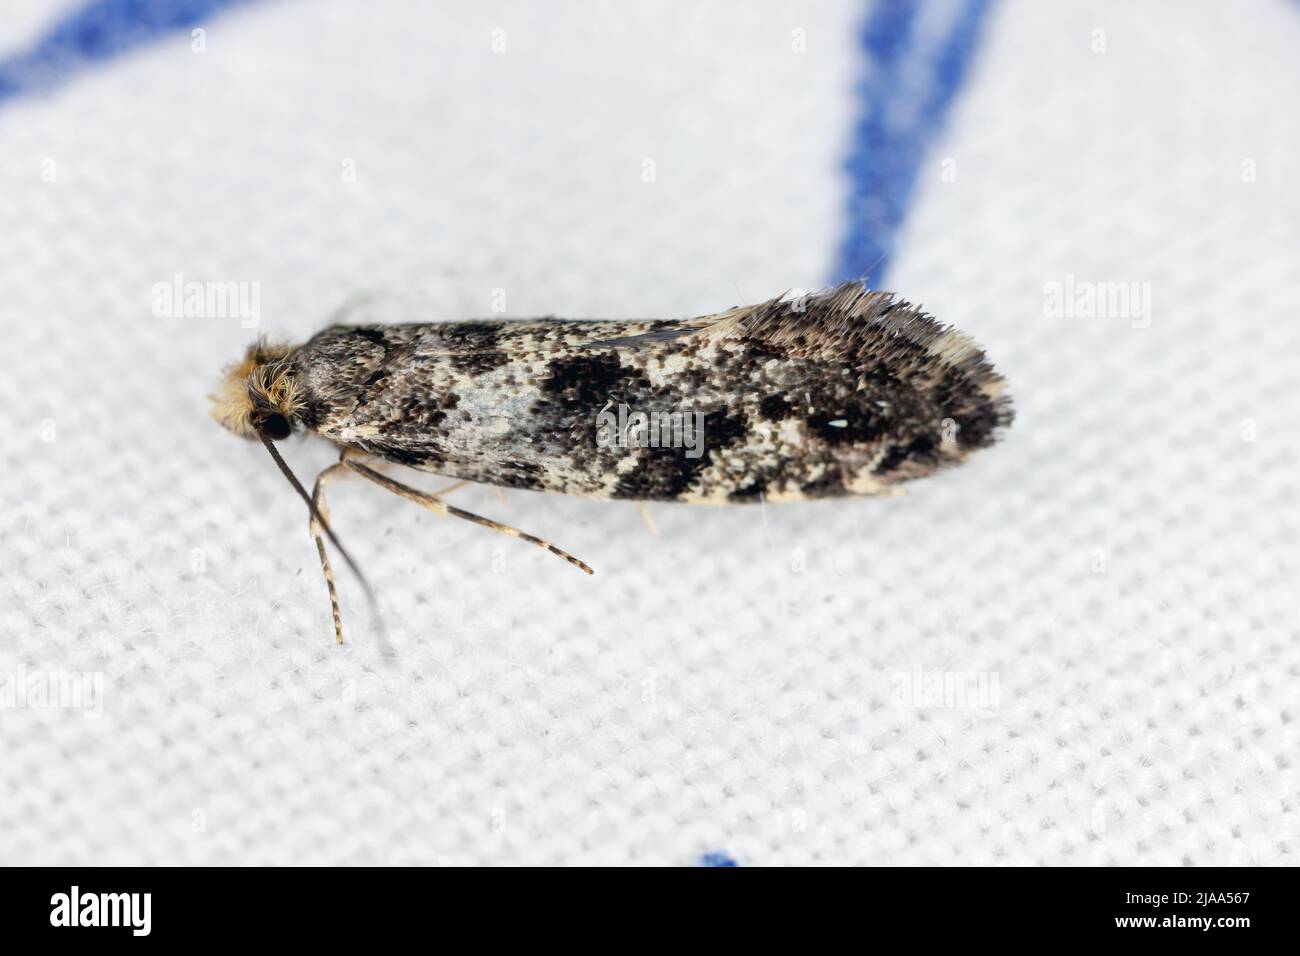 European grain worm or grain moth Nemapogon granella granellus is a species of tineoid moth. It belongs to the fungus moth family (Tineidae). Stock Photo